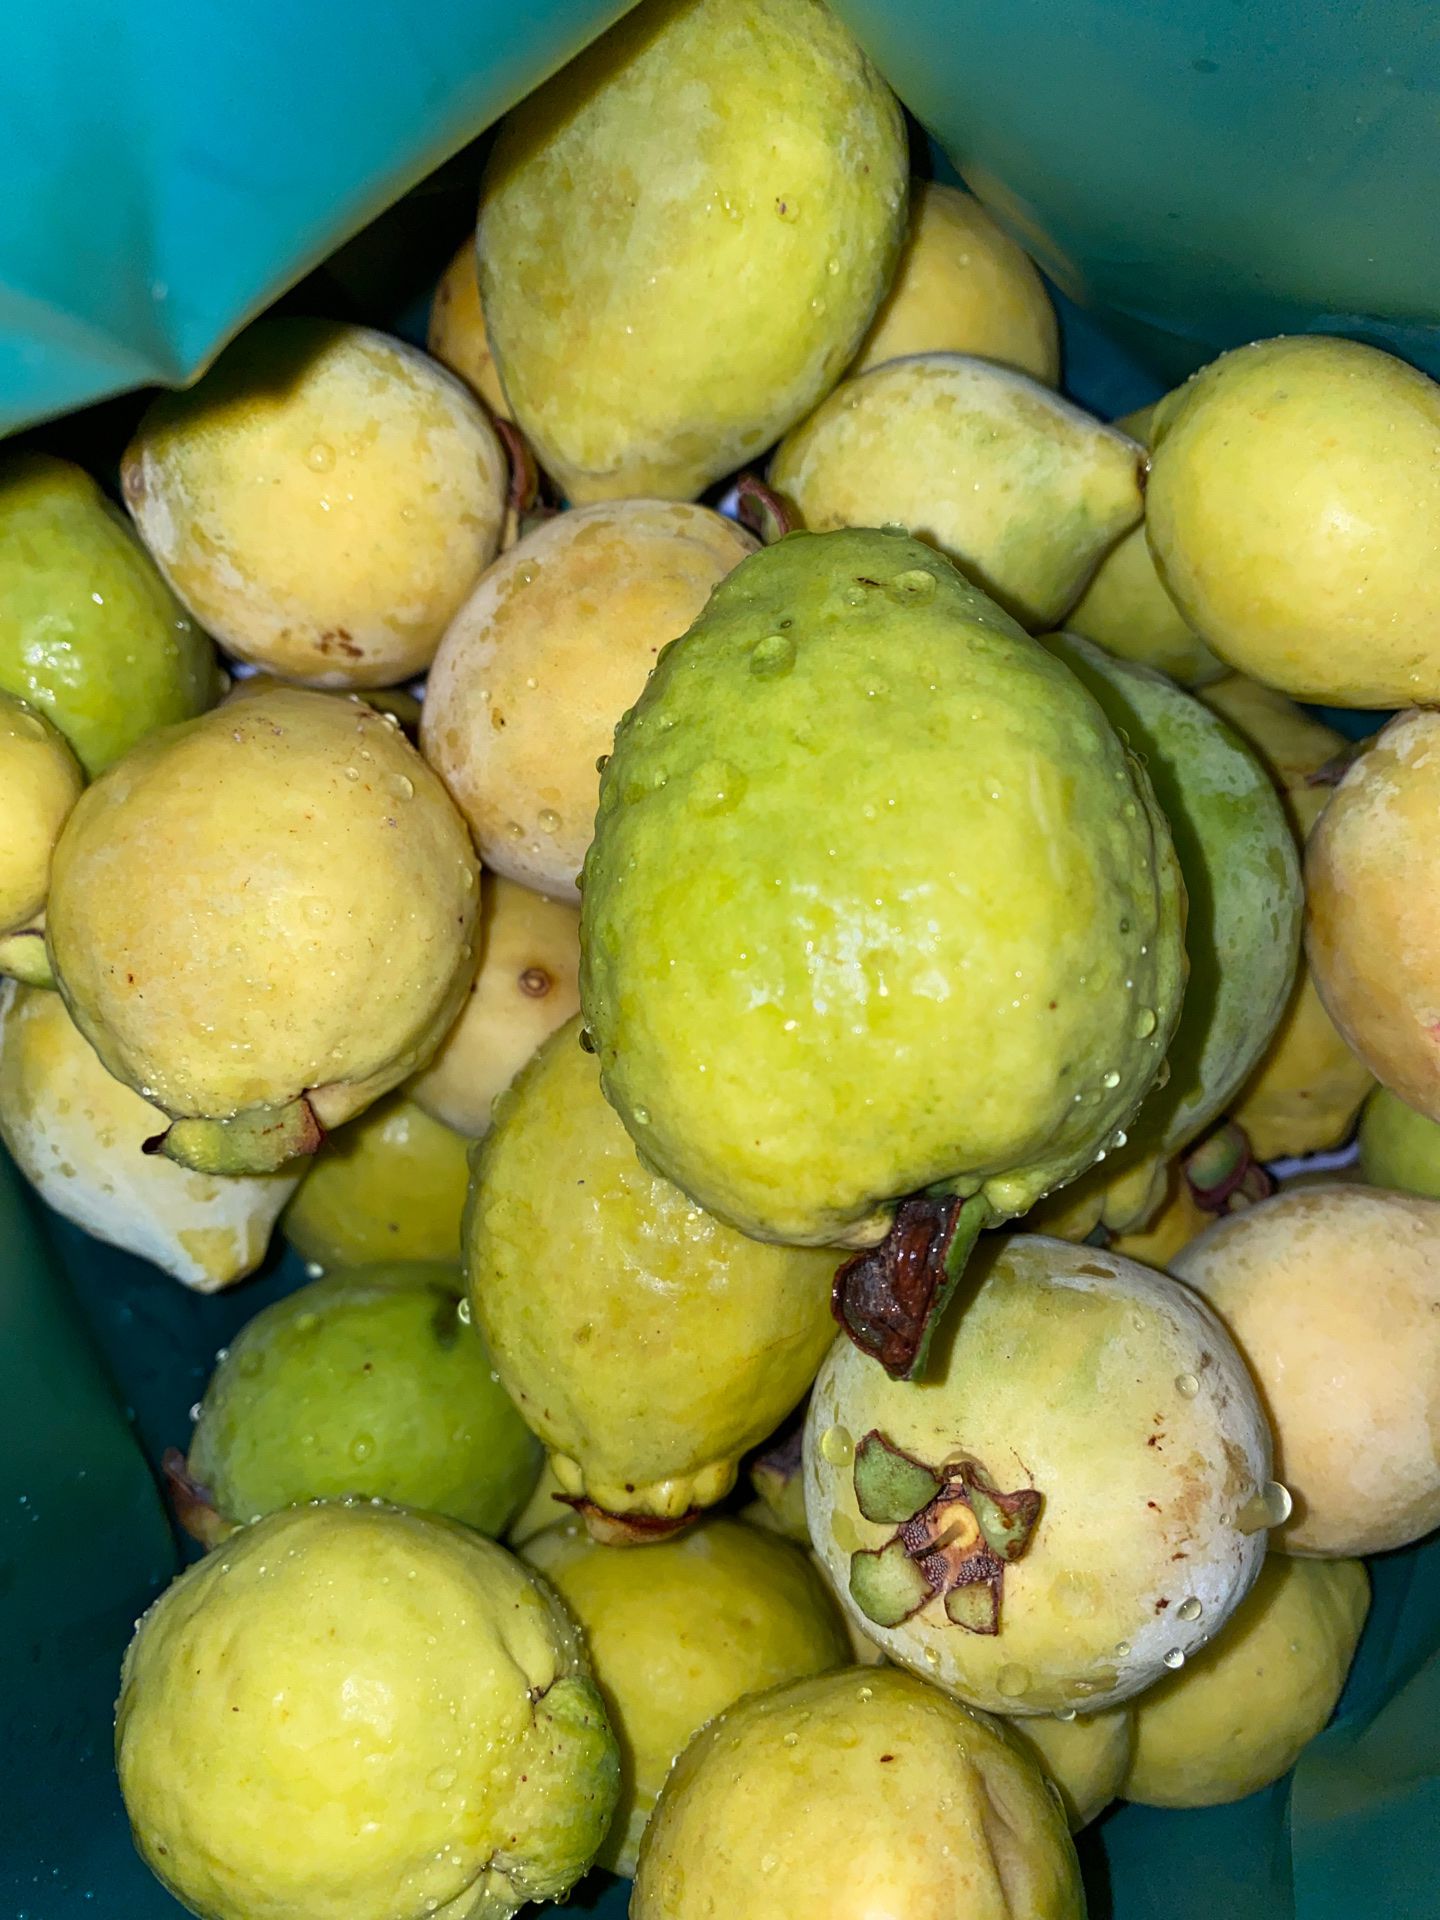 5 pound bag of organic guavas $5